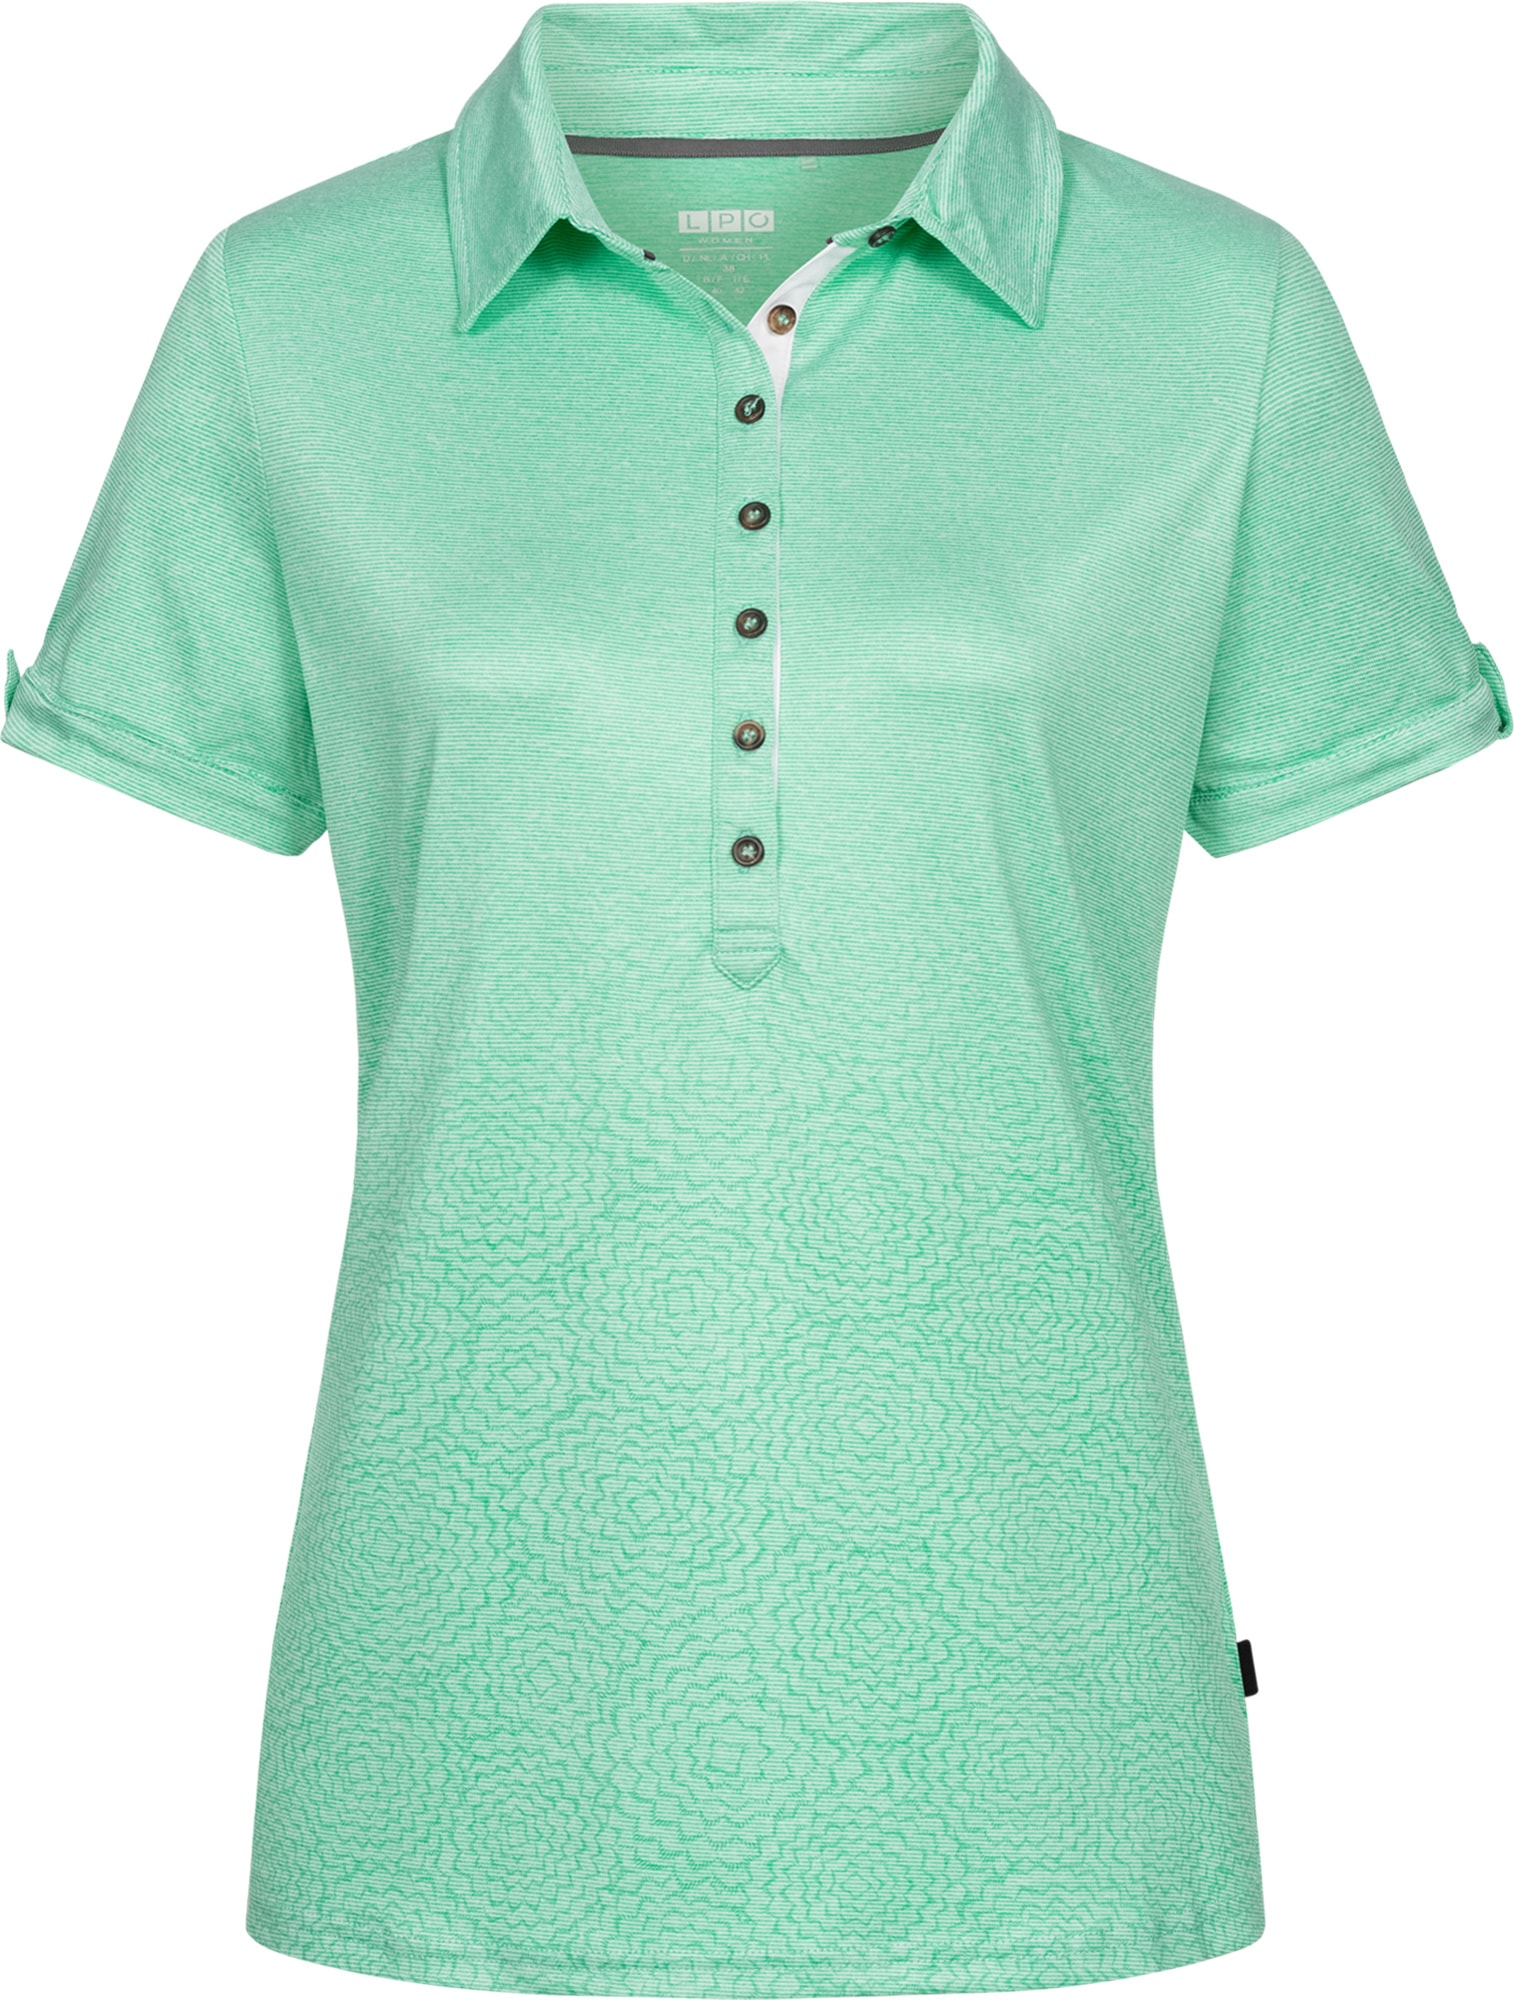 LPO Poloshirt »HEDLEY NEW III nachhaltig Funktionspolo mit recyceltem versandkostenfrei kaufen WOMEN«, Polyester